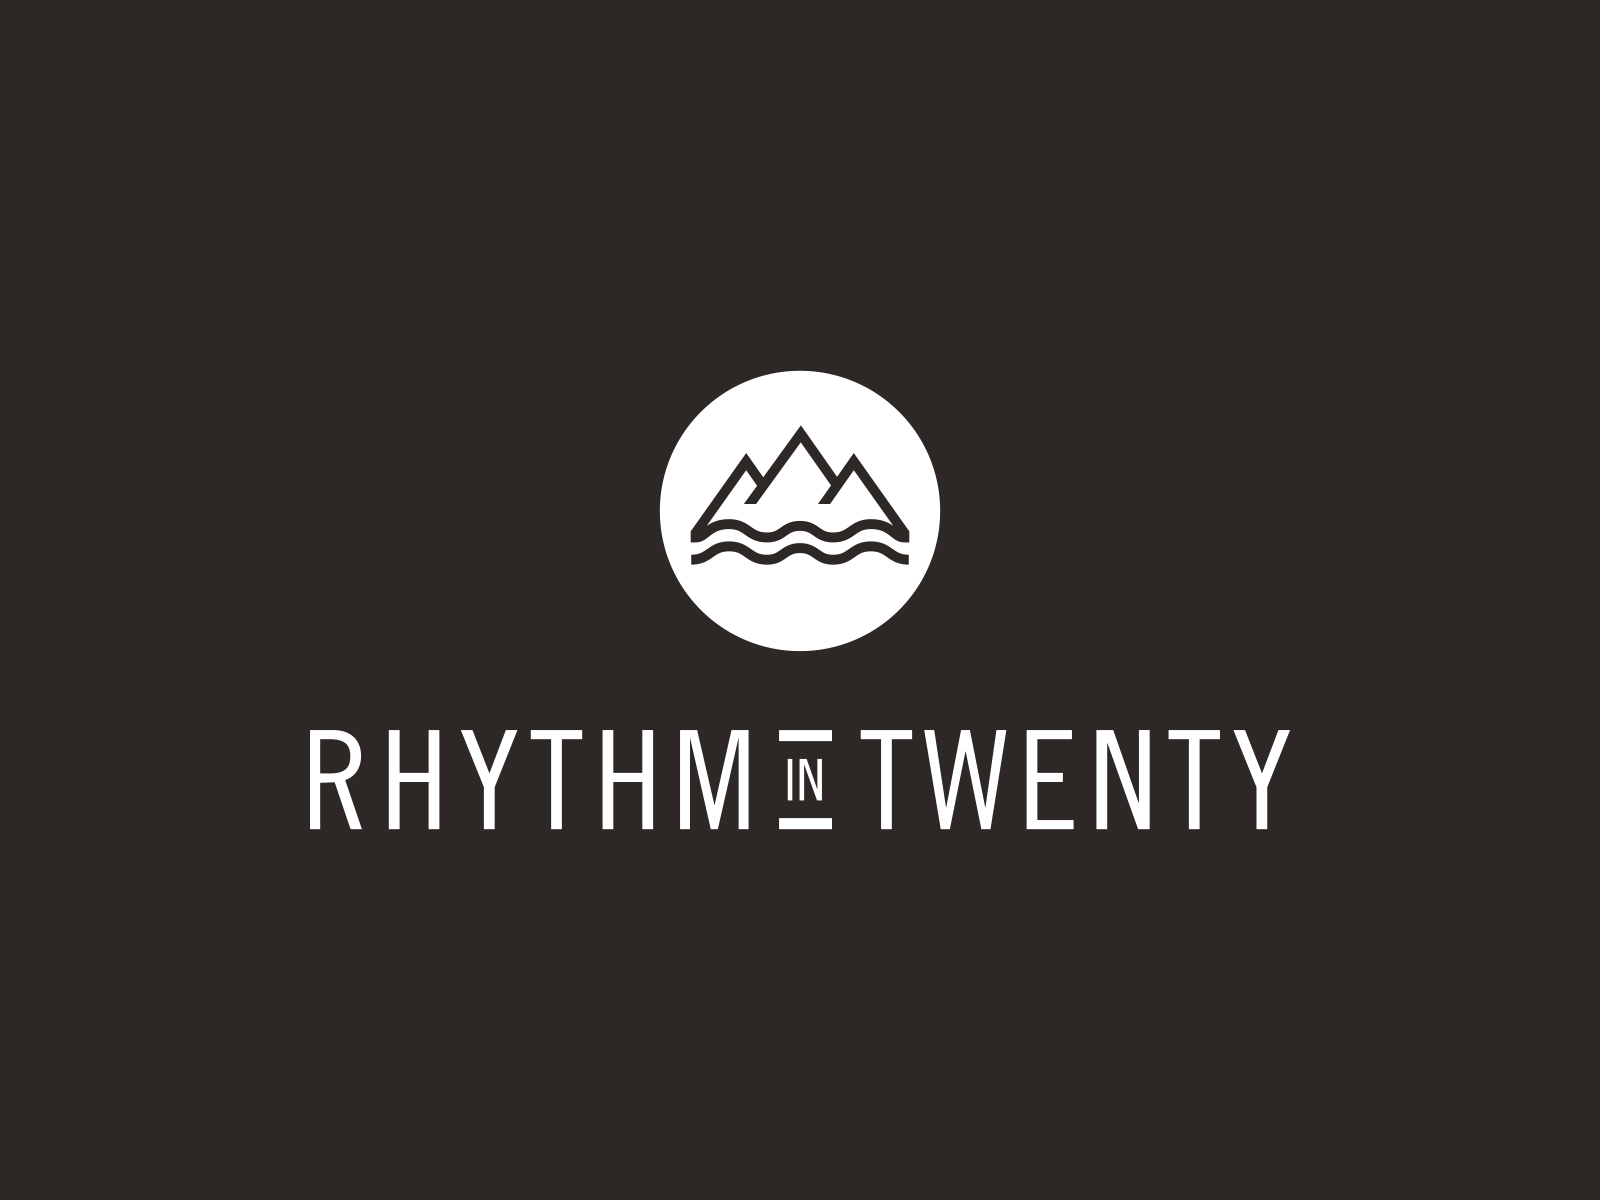 Rhythm - Music App Logo by Al Mamun | Logo & Branding Expert on Dribbble